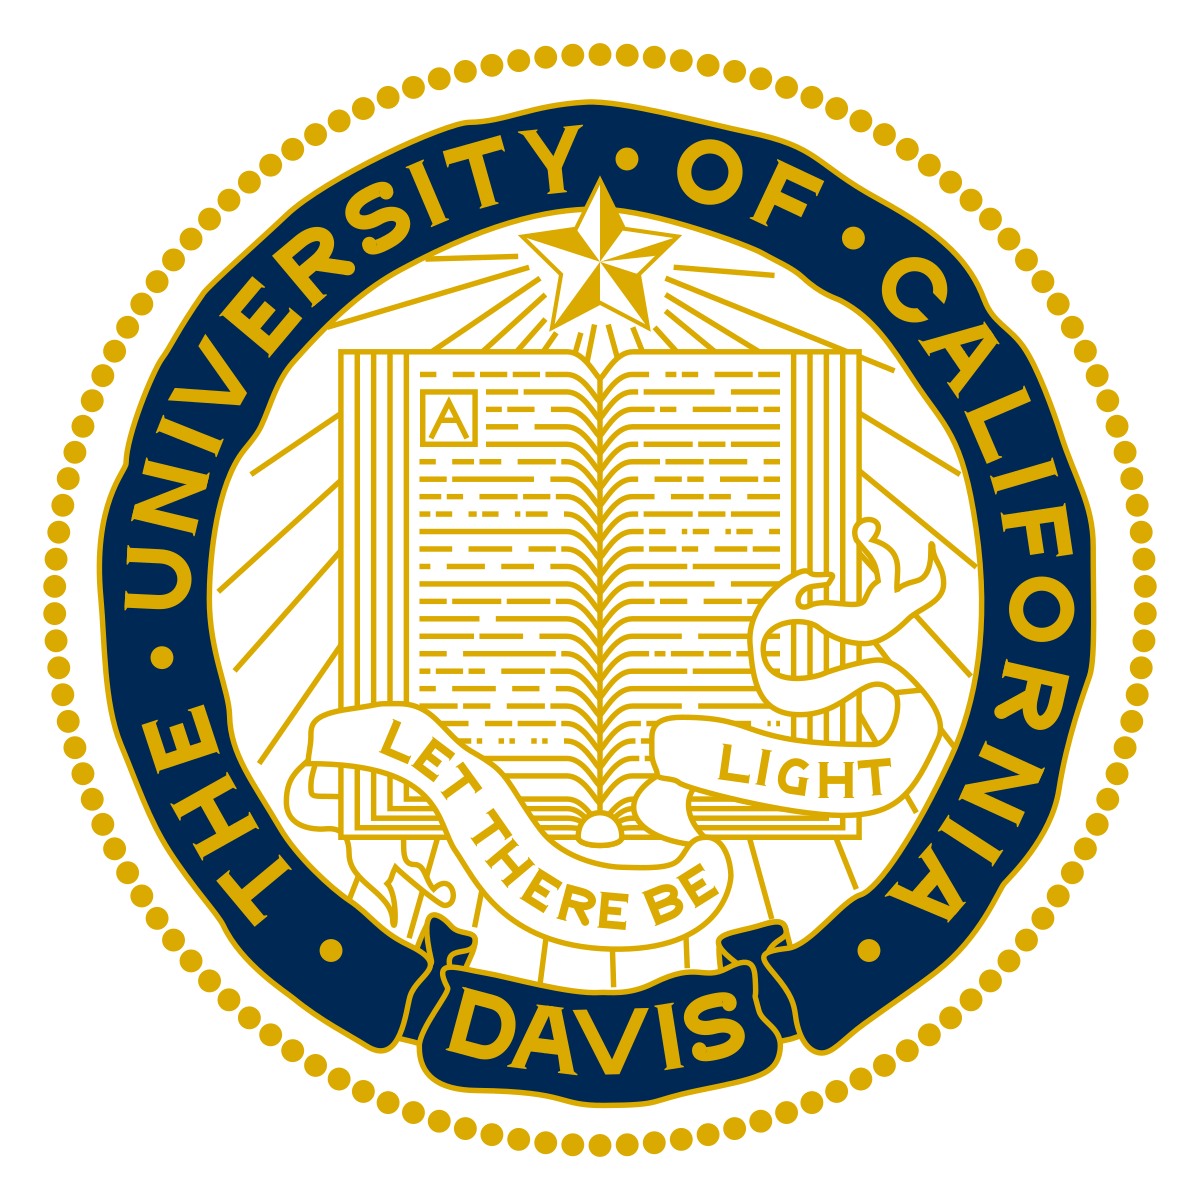 university of california davis logo